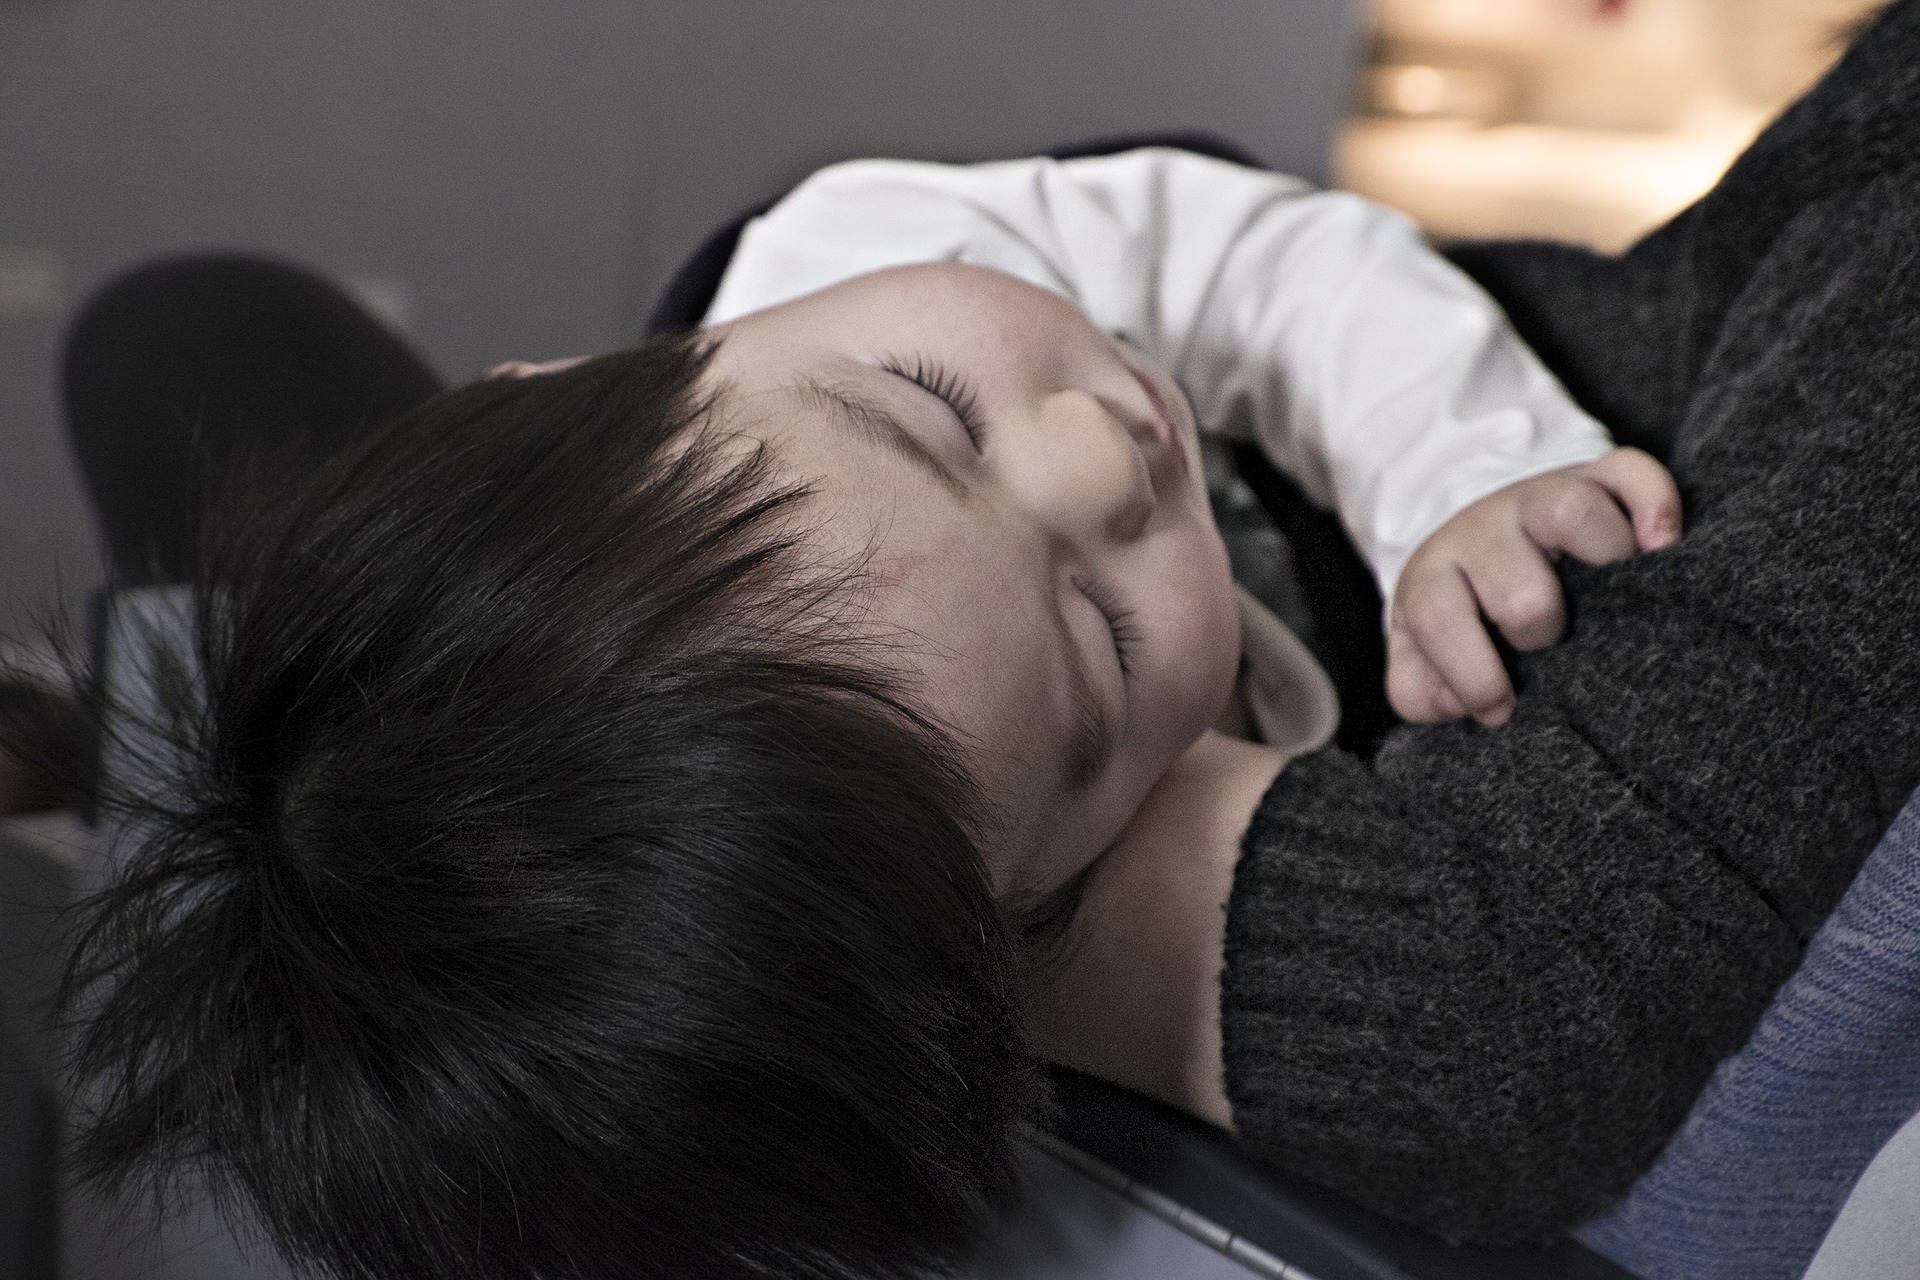 Photo by Free-photos at pixabay https://pixabay.com/en/toddler-boy-sleeping-child-1245674/